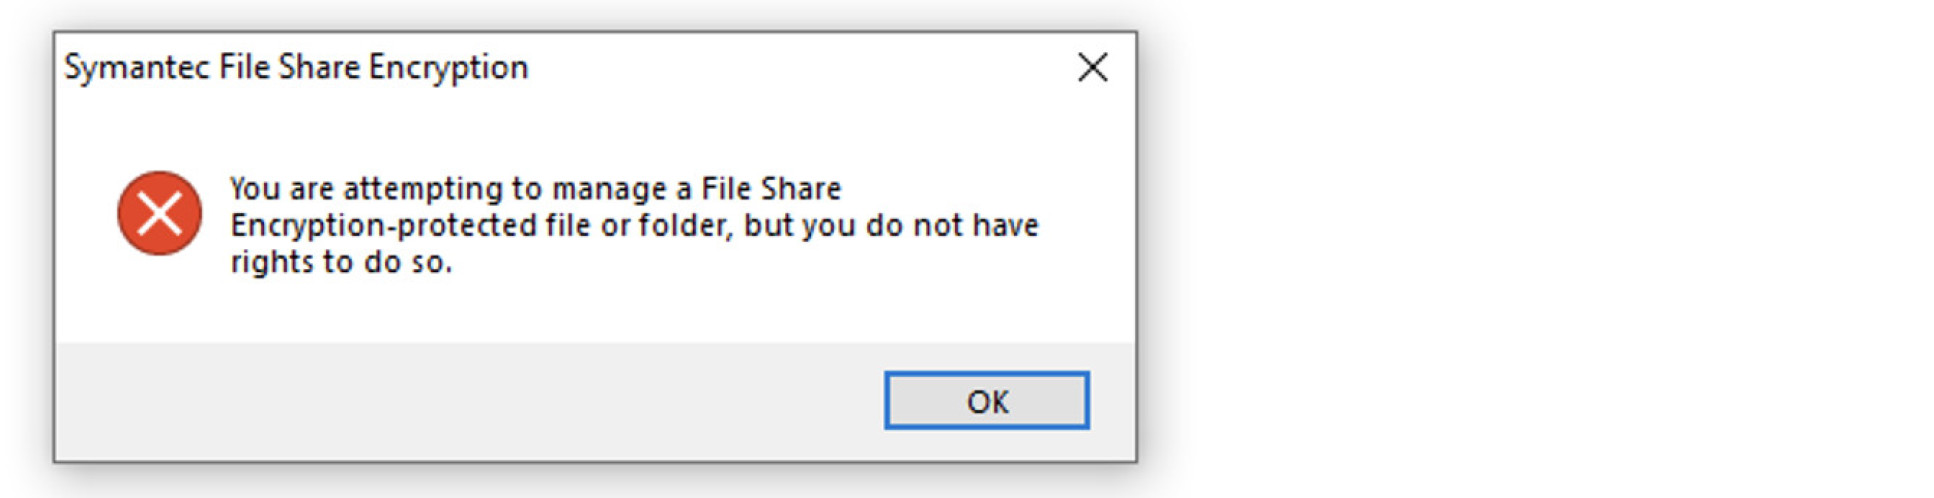 Symantec error screenshot